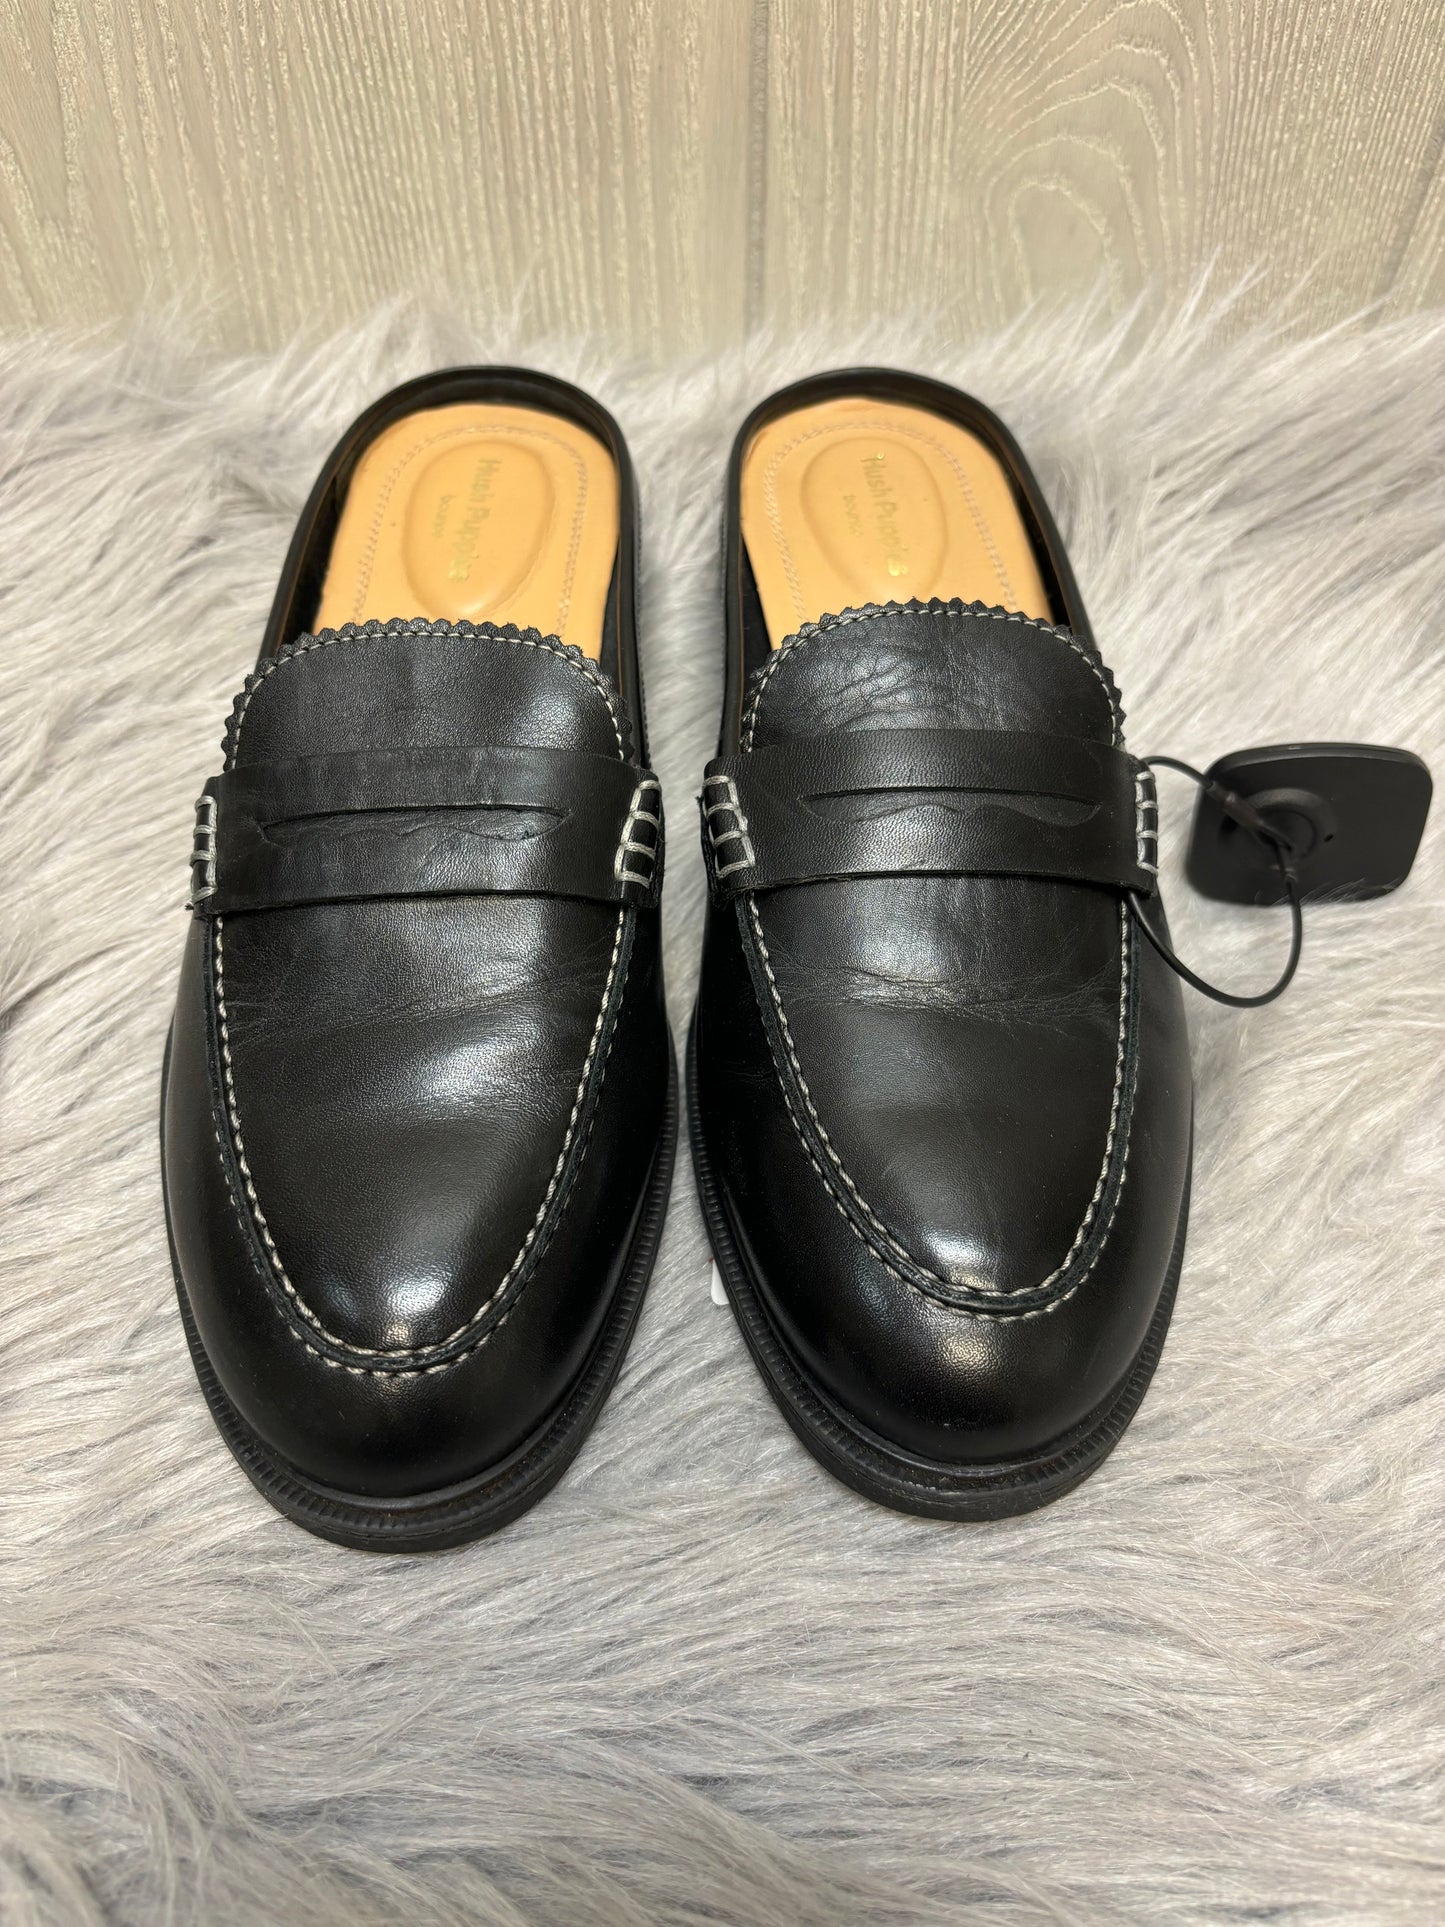 Black Shoes Flats Hush Puppies, Size 8